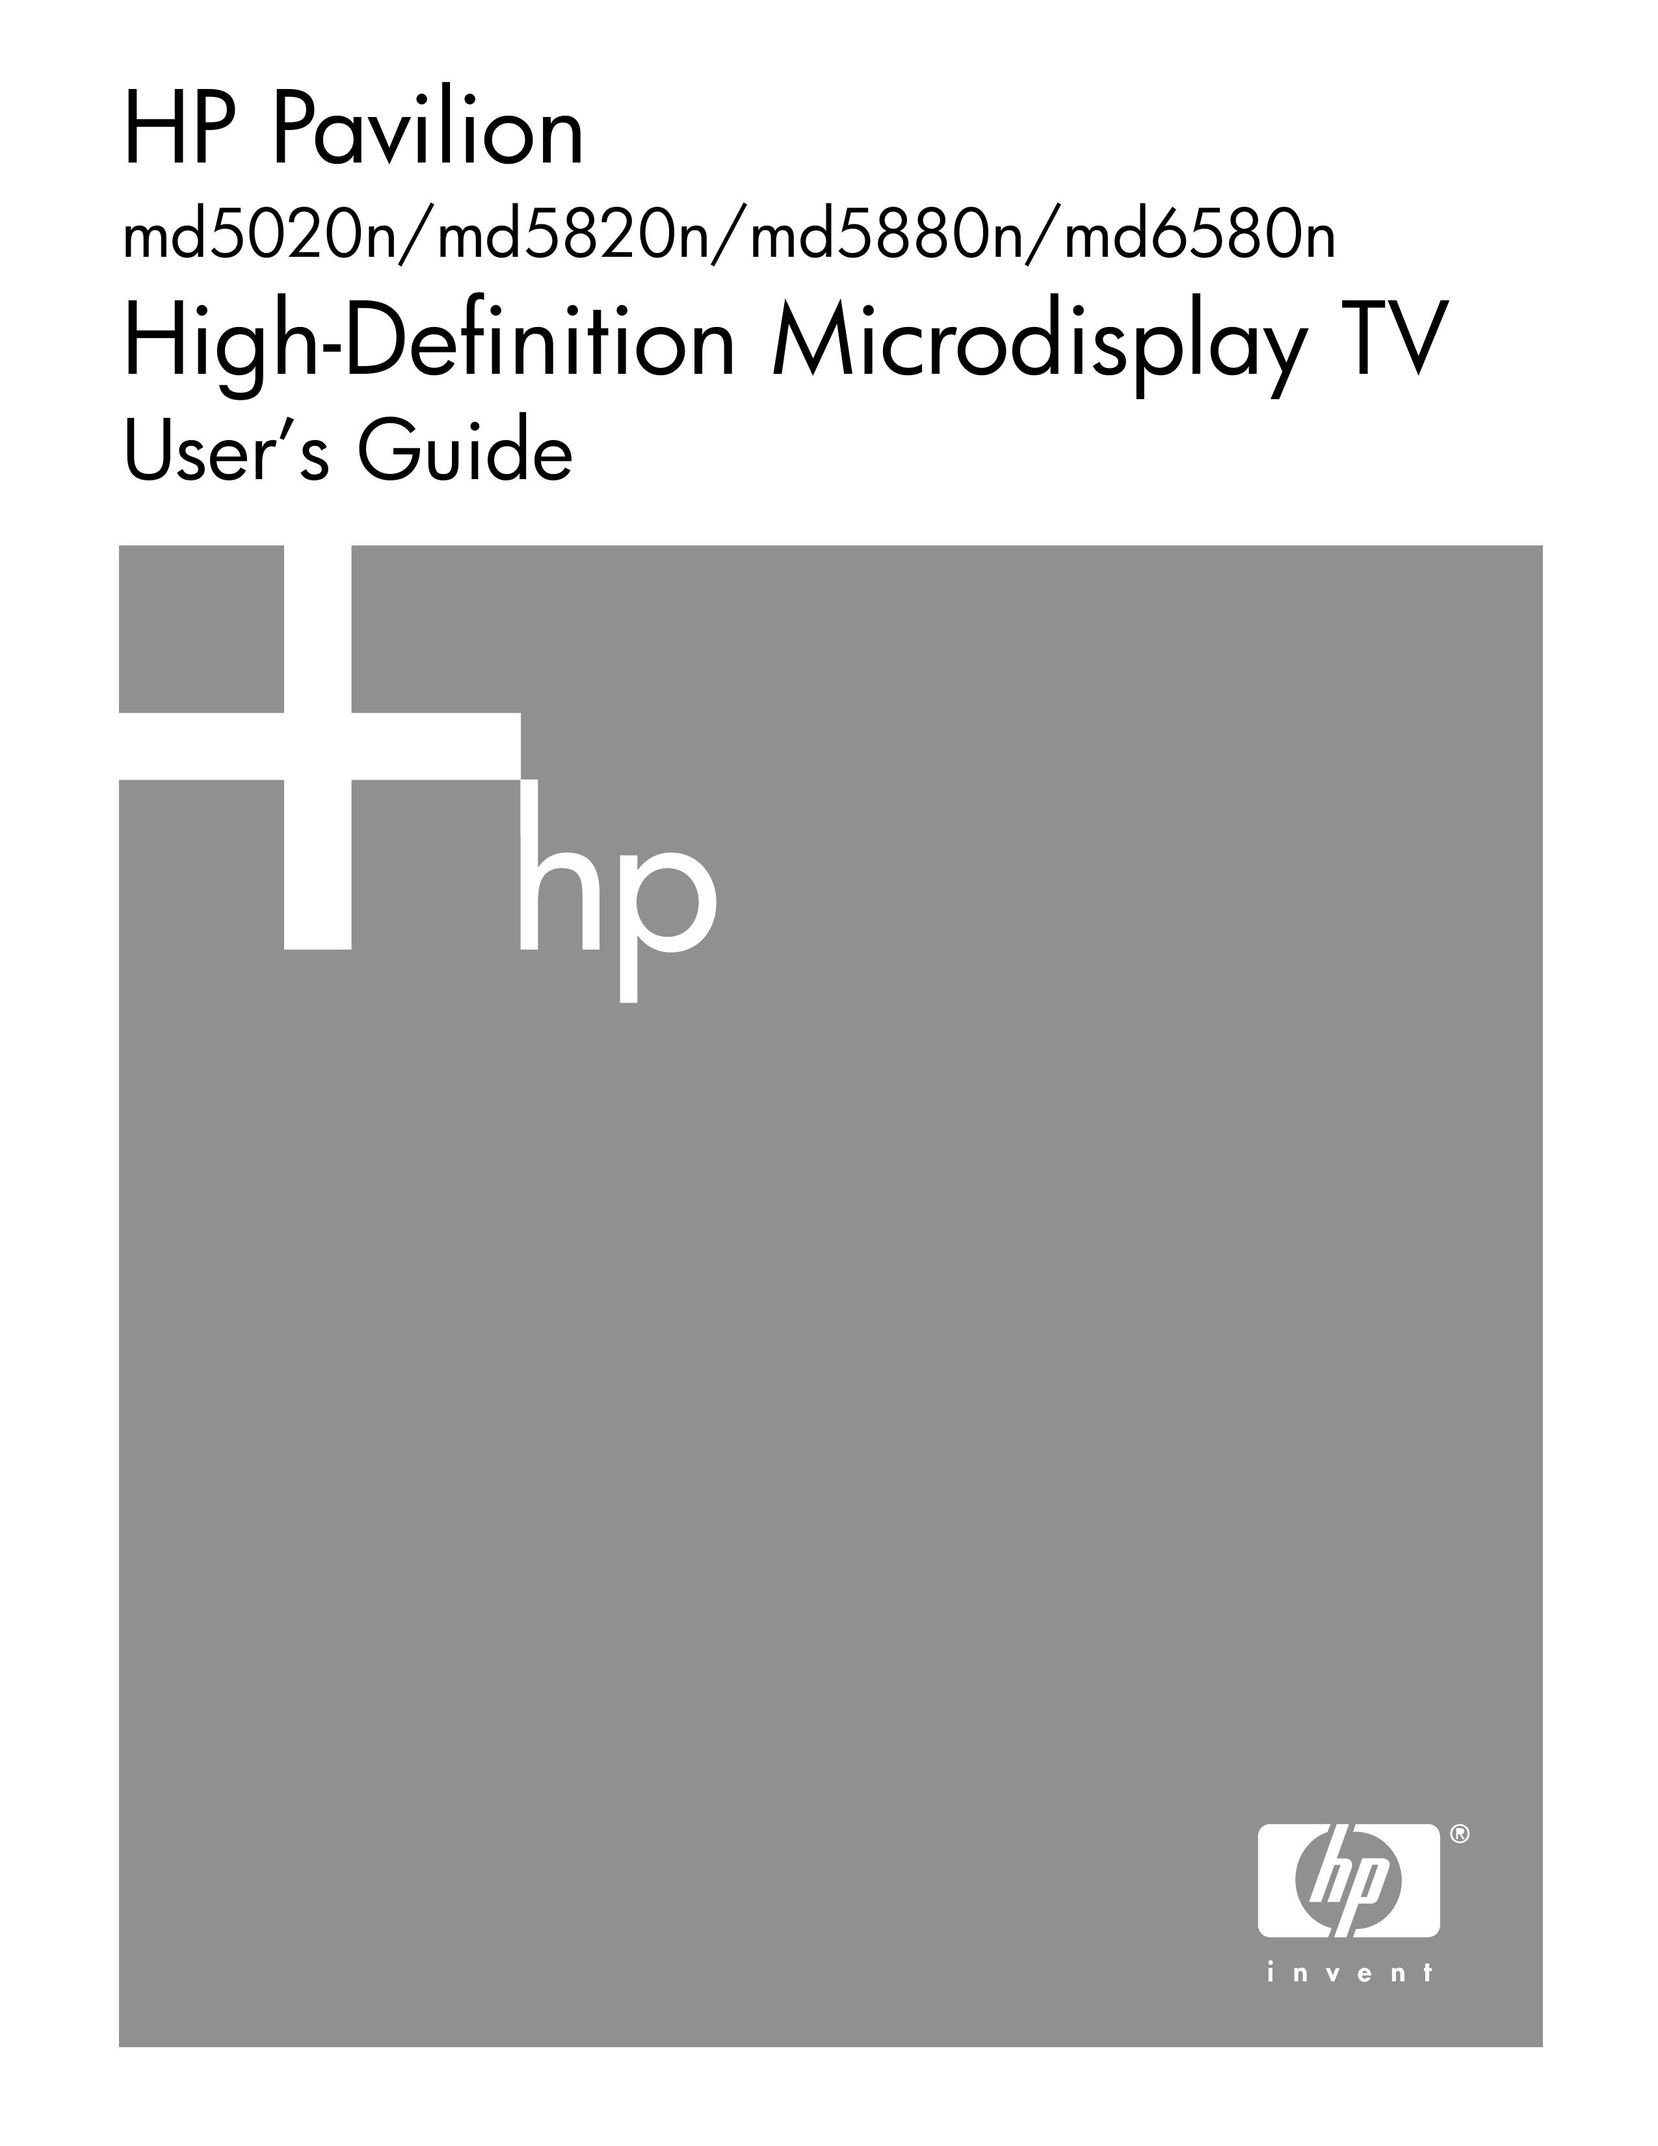 HP (Hewlett-Packard) md6580n Flat Panel Television User Manual